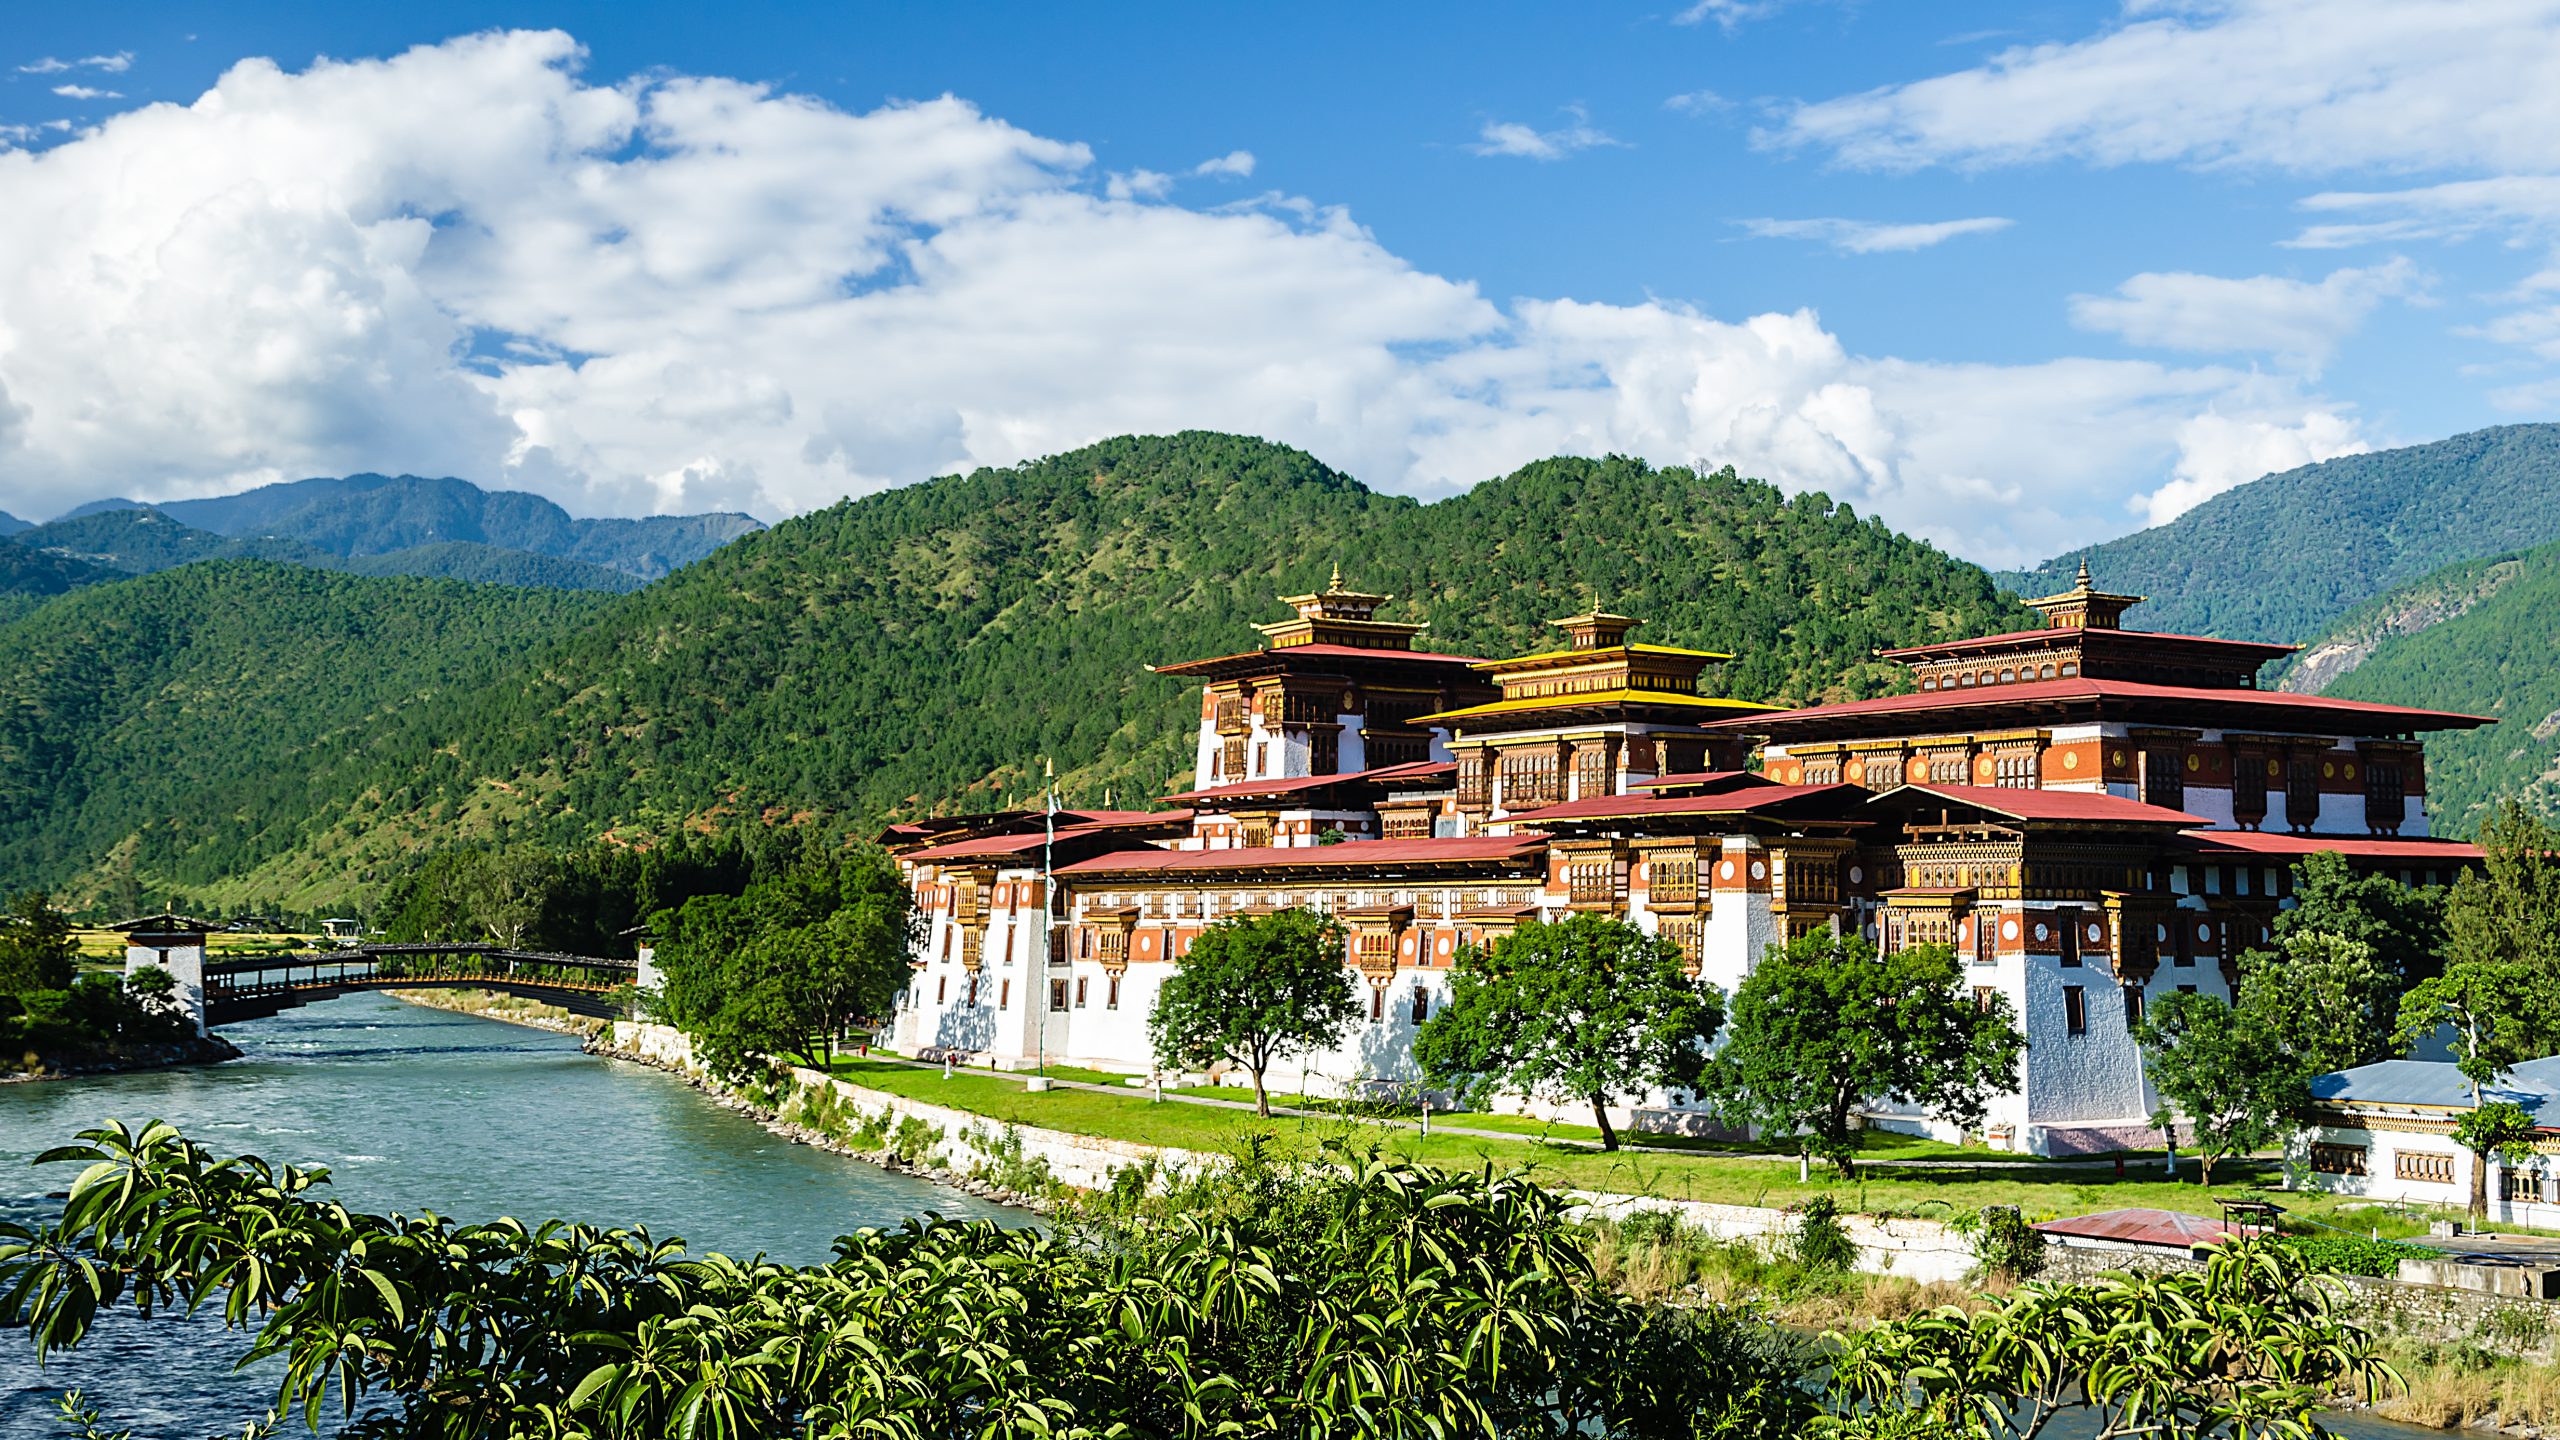 Bhutan – where happiness is a way of life